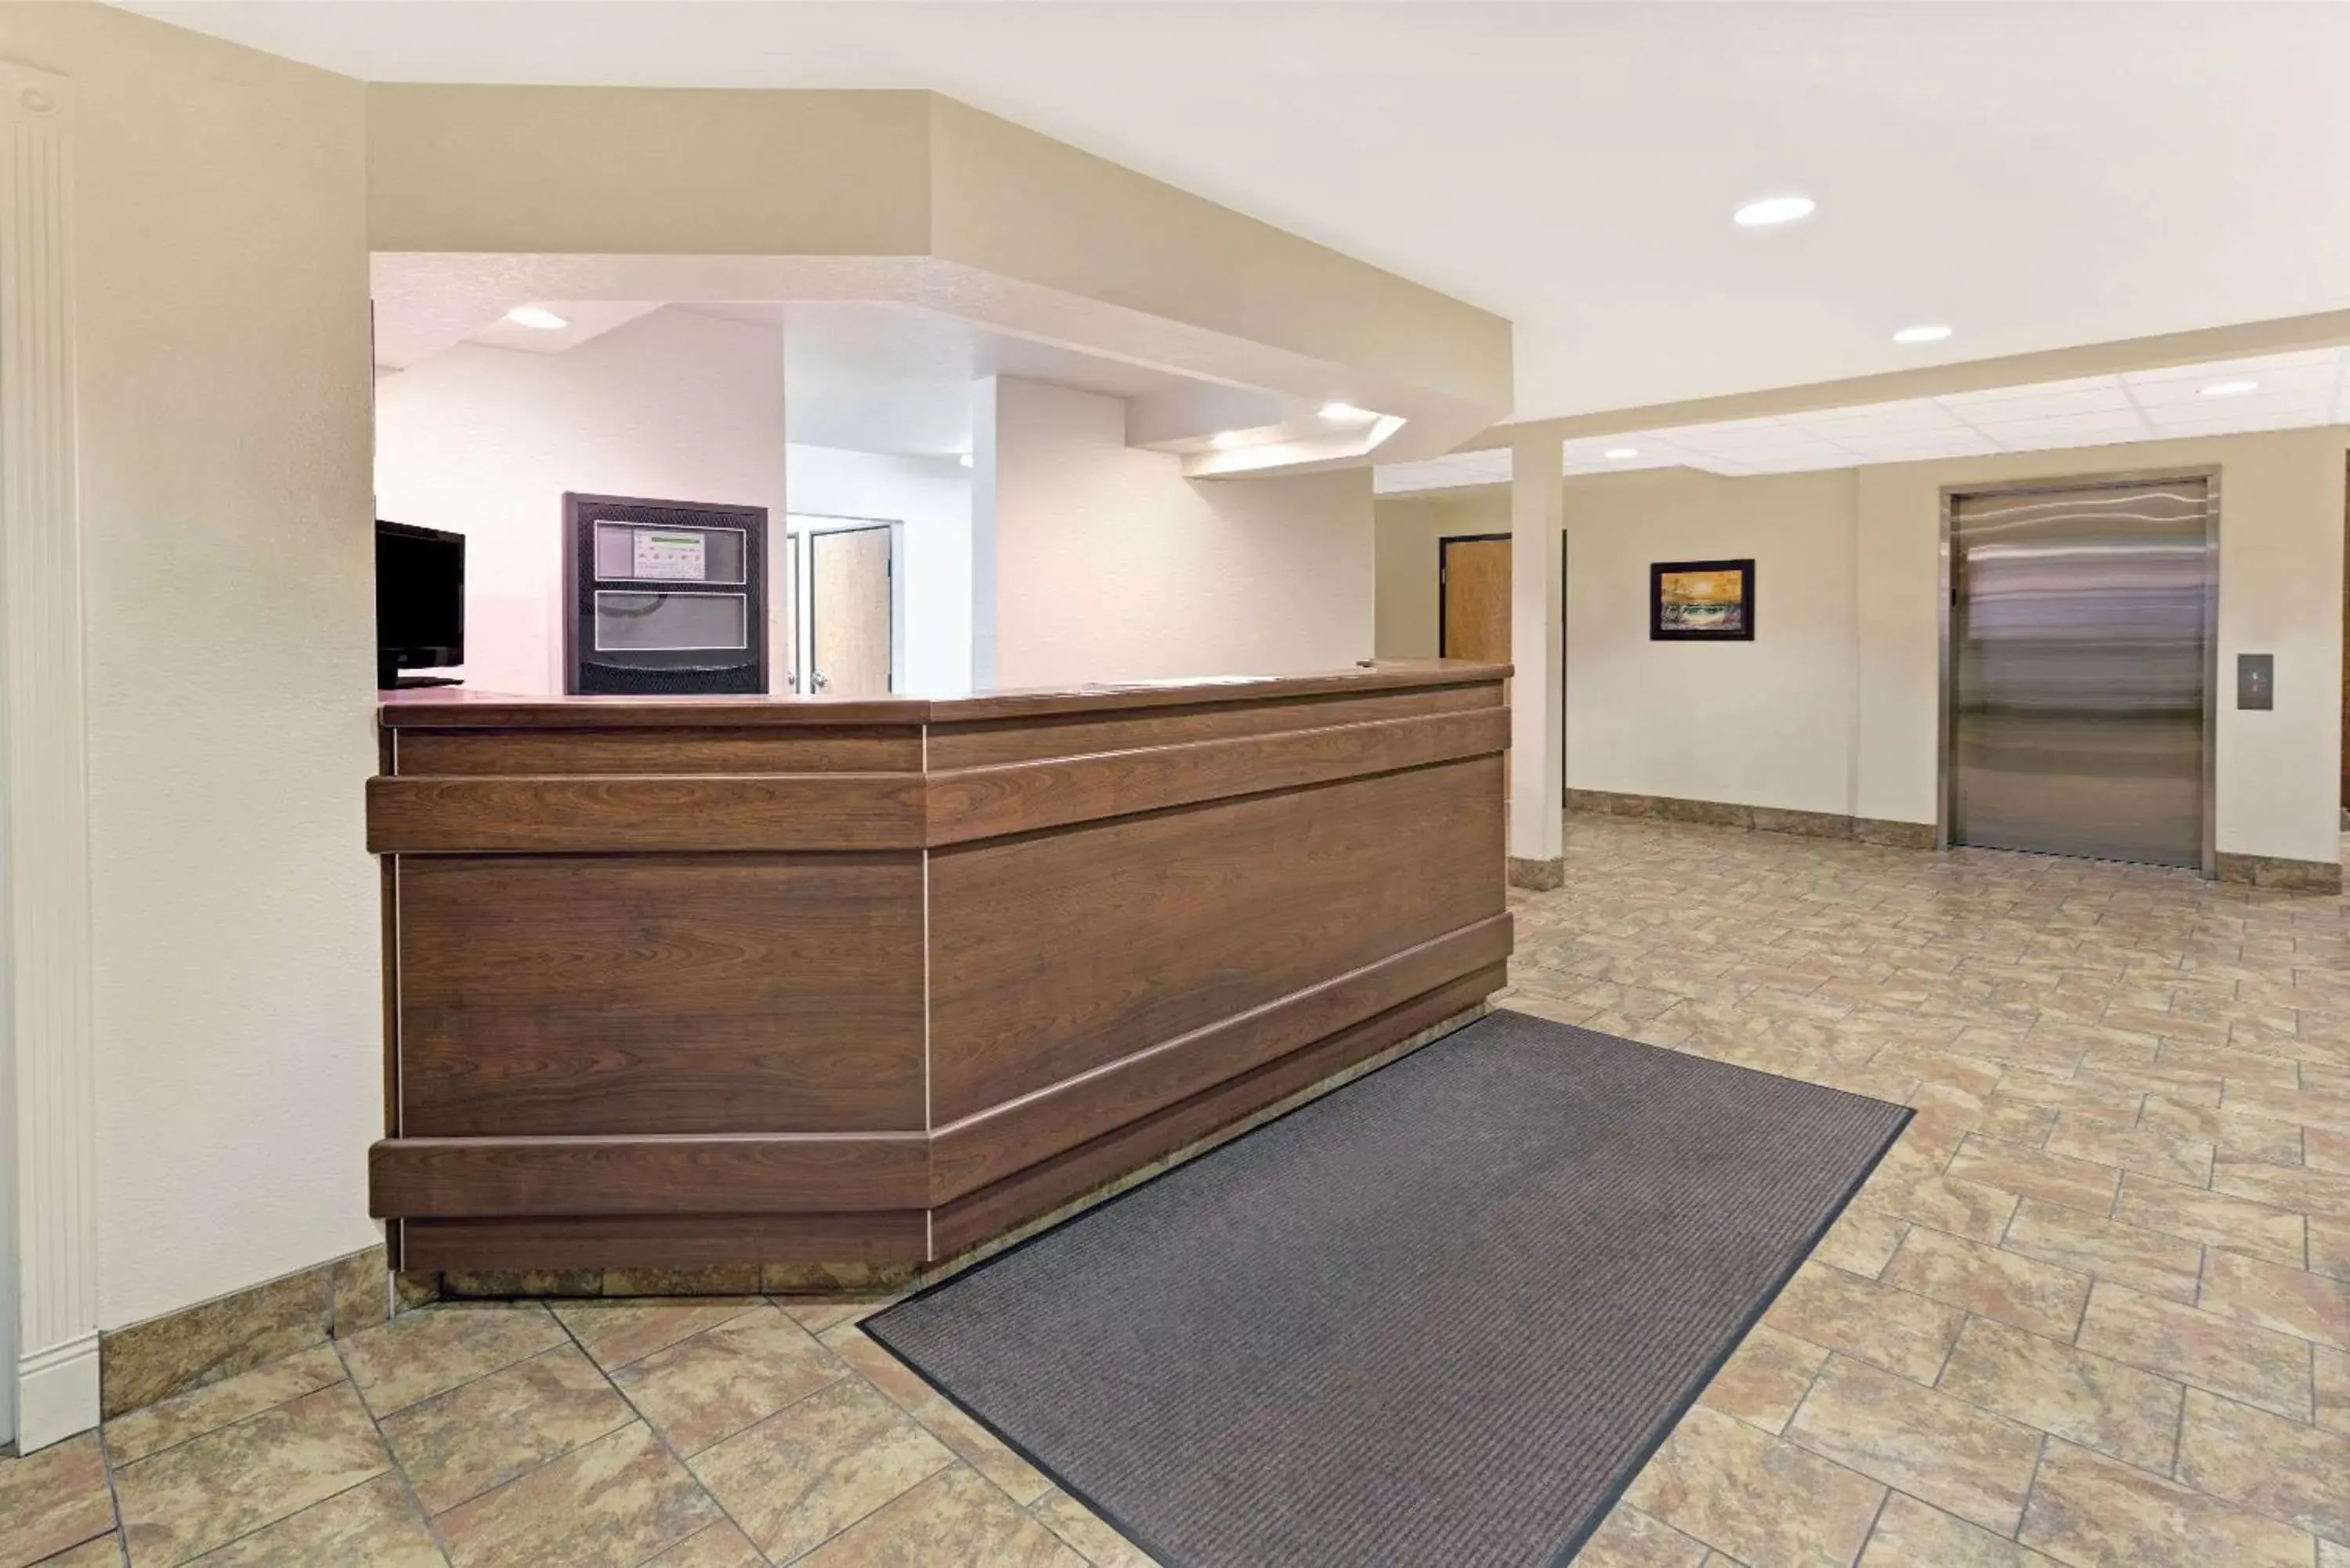 Lobby or reception, Lobby/Reception in Microtel Inn & Suites Cheyenne